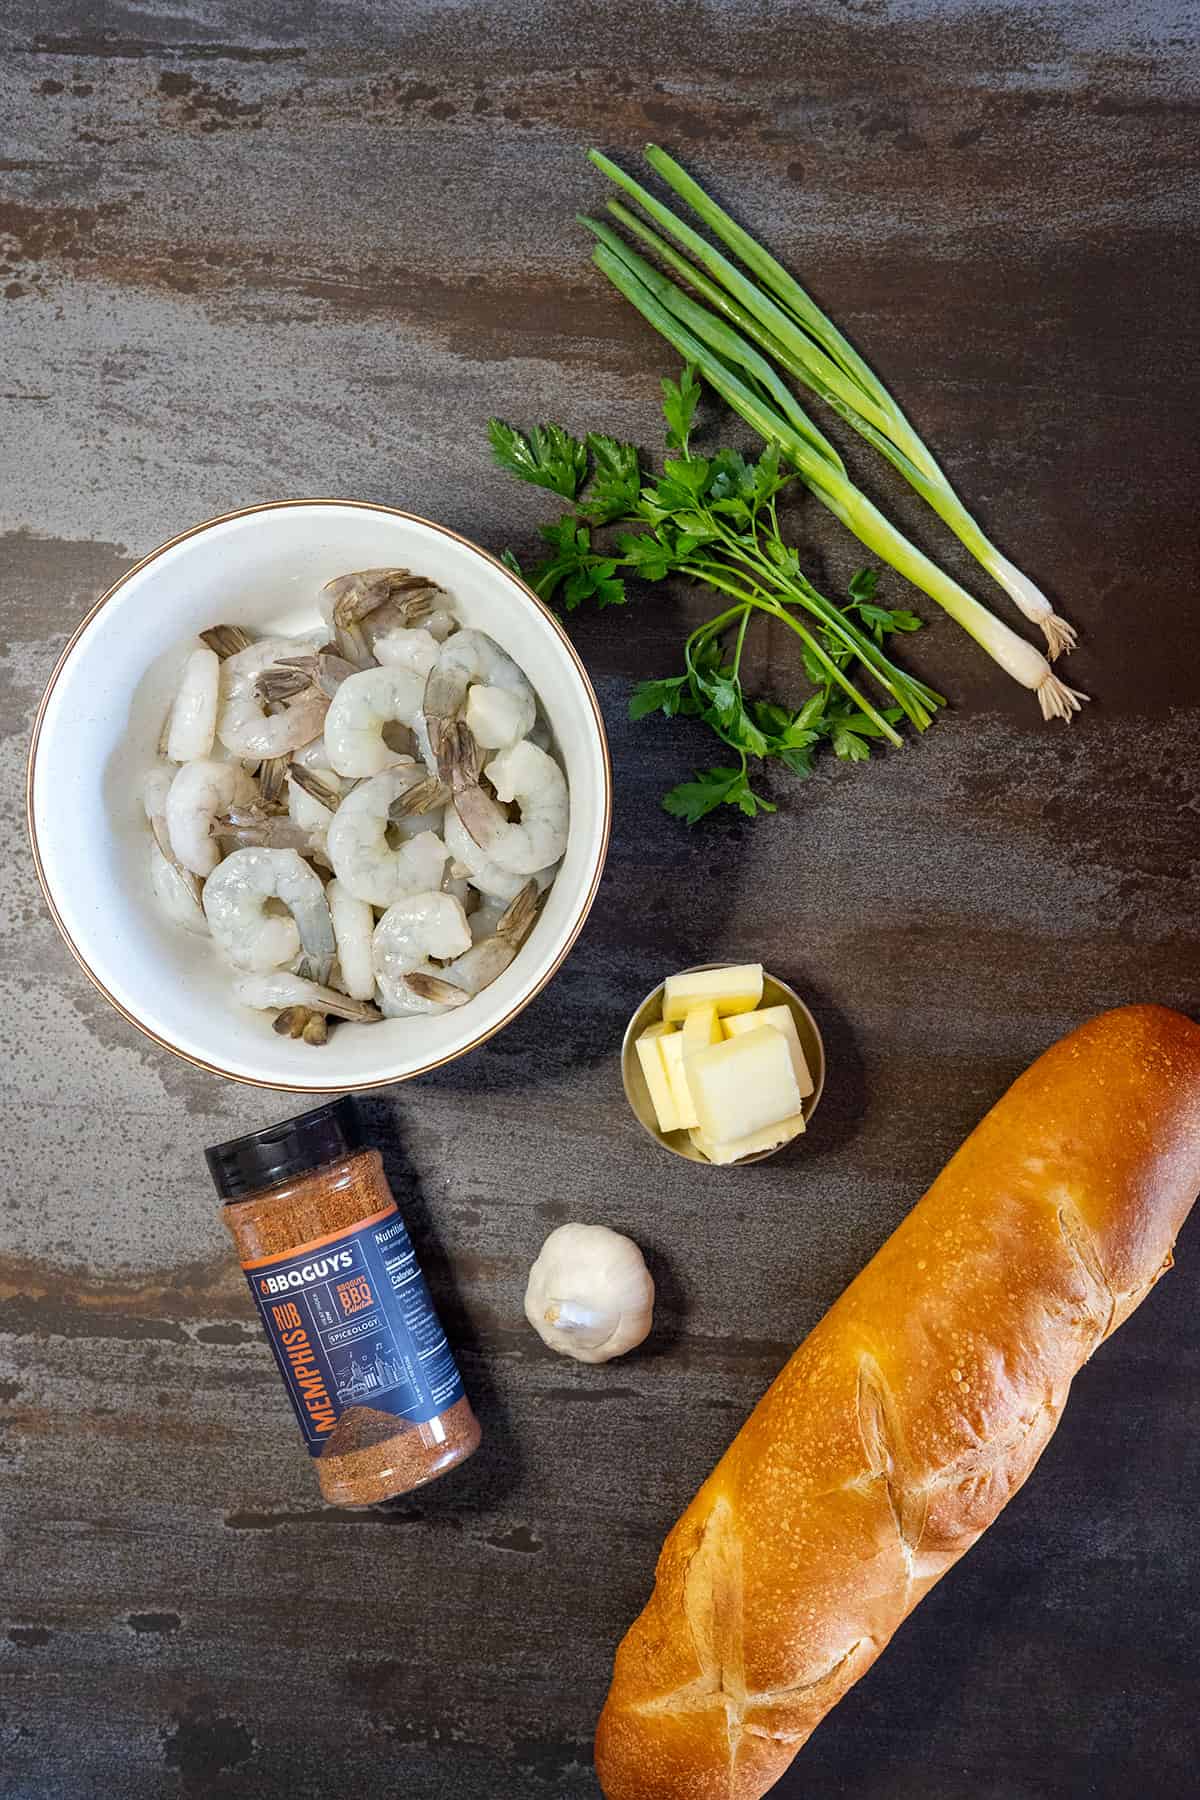 BBQ shrimp ingredients: shrimp, Memphis Rub, butter, garlic, bread, green onions, parsley.